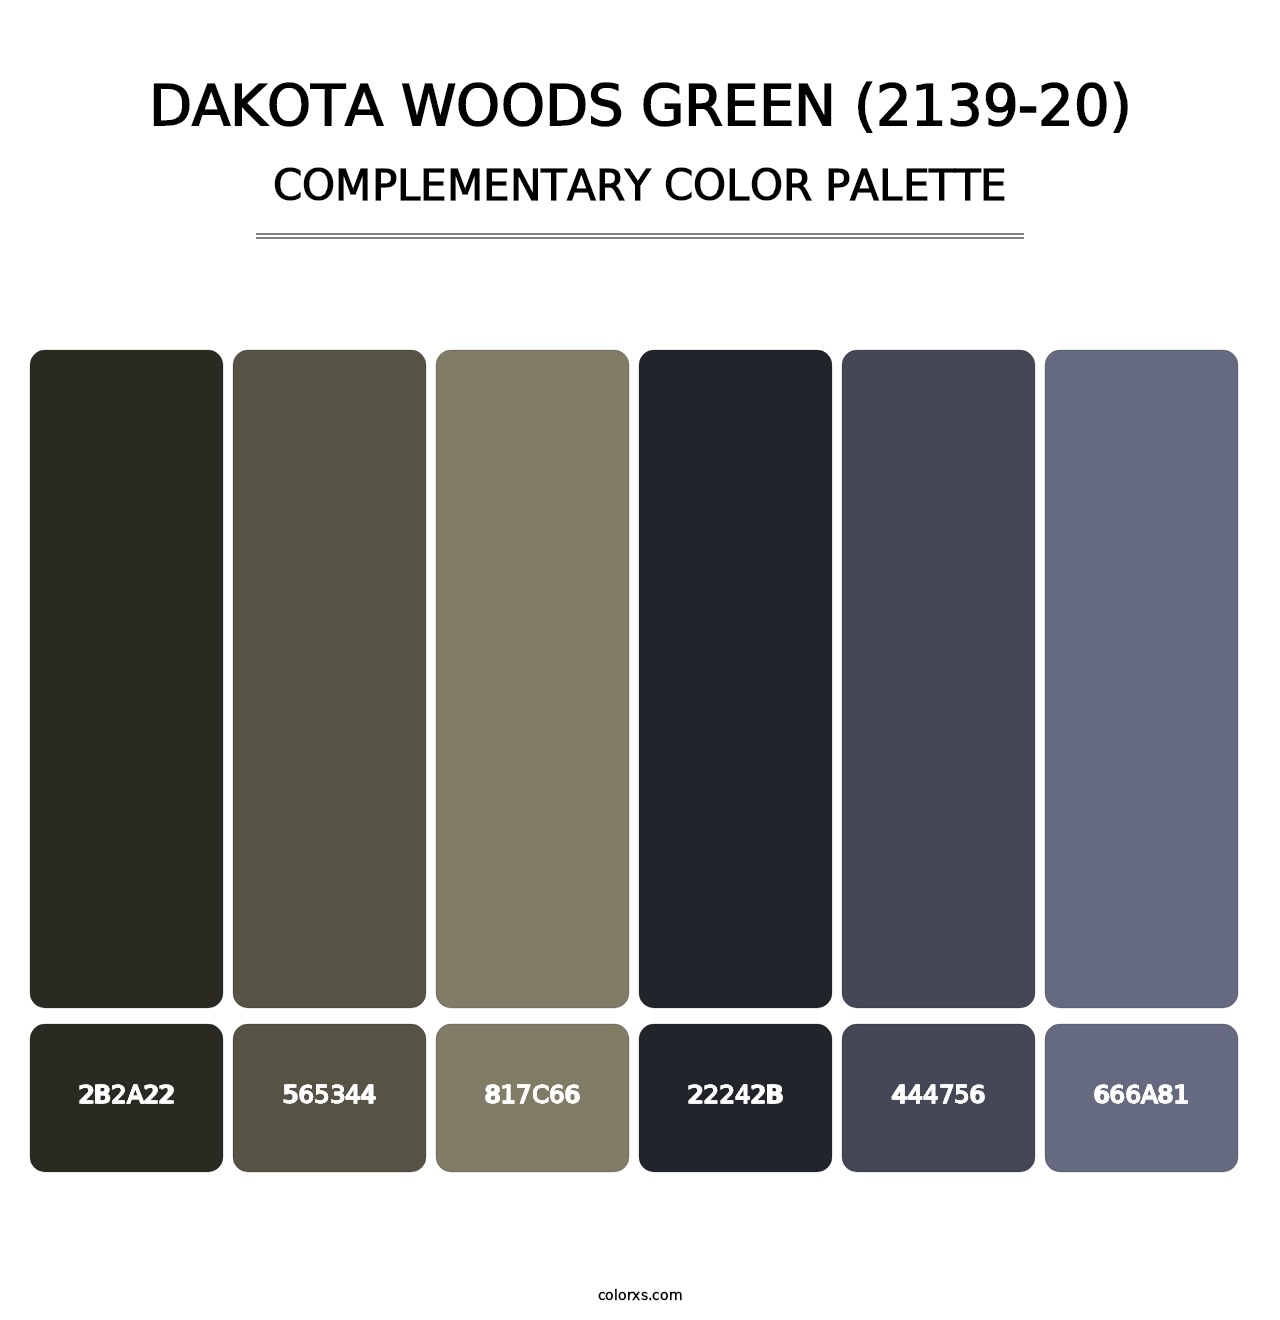 Dakota Woods Green (2139-20) - Complementary Color Palette